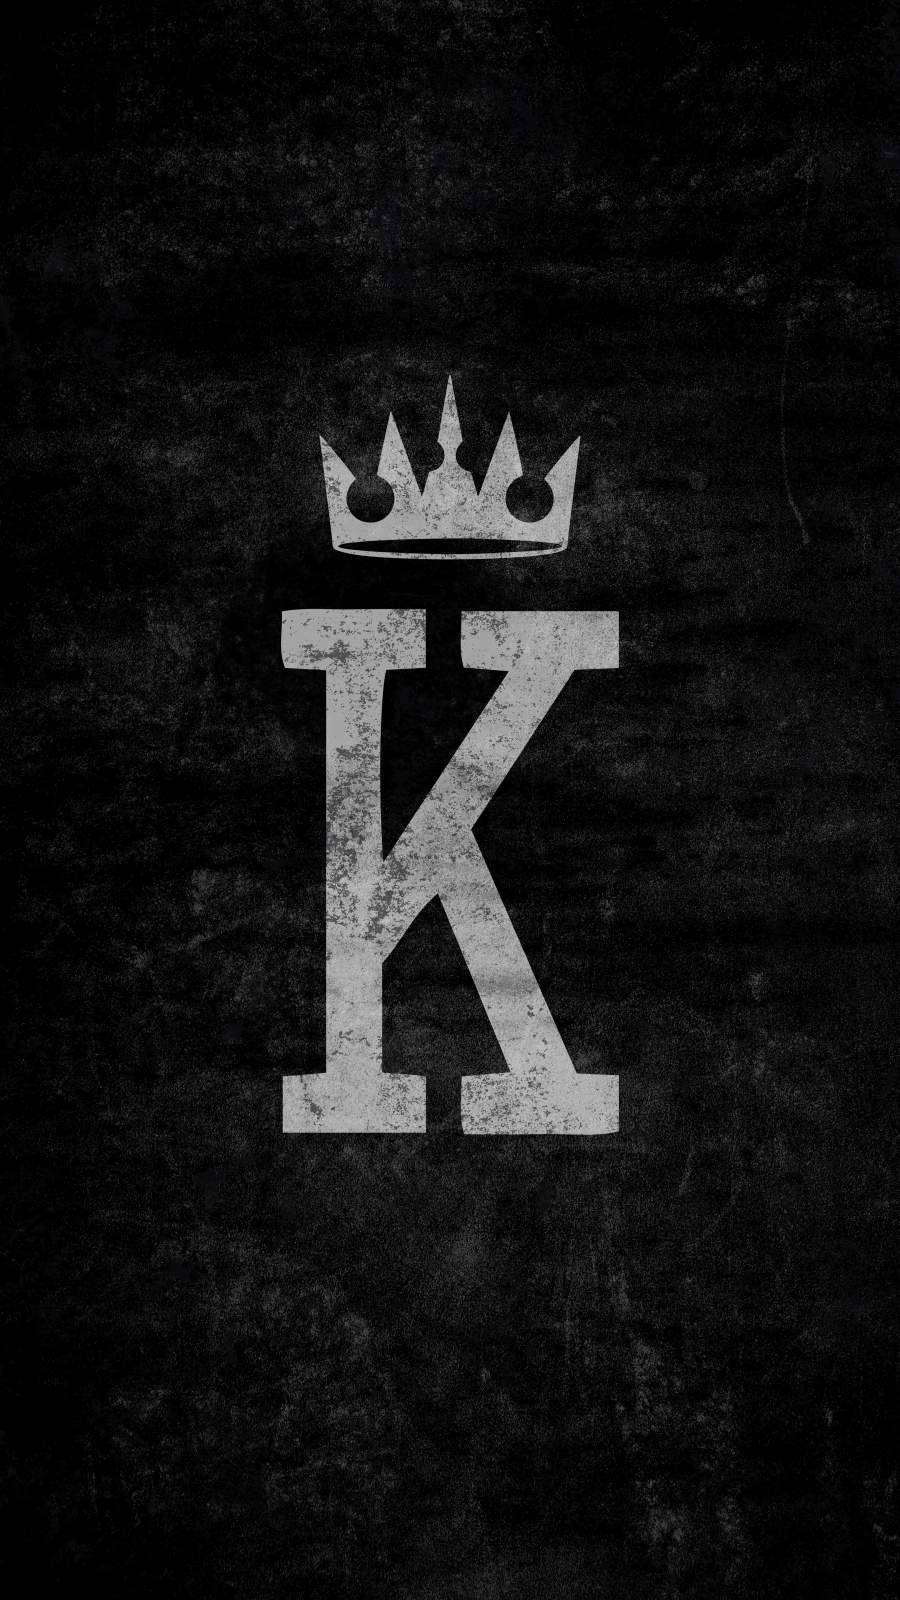 Free Black King Wallpaper Downloads, [100+] Black King Wallpapers for FREE  